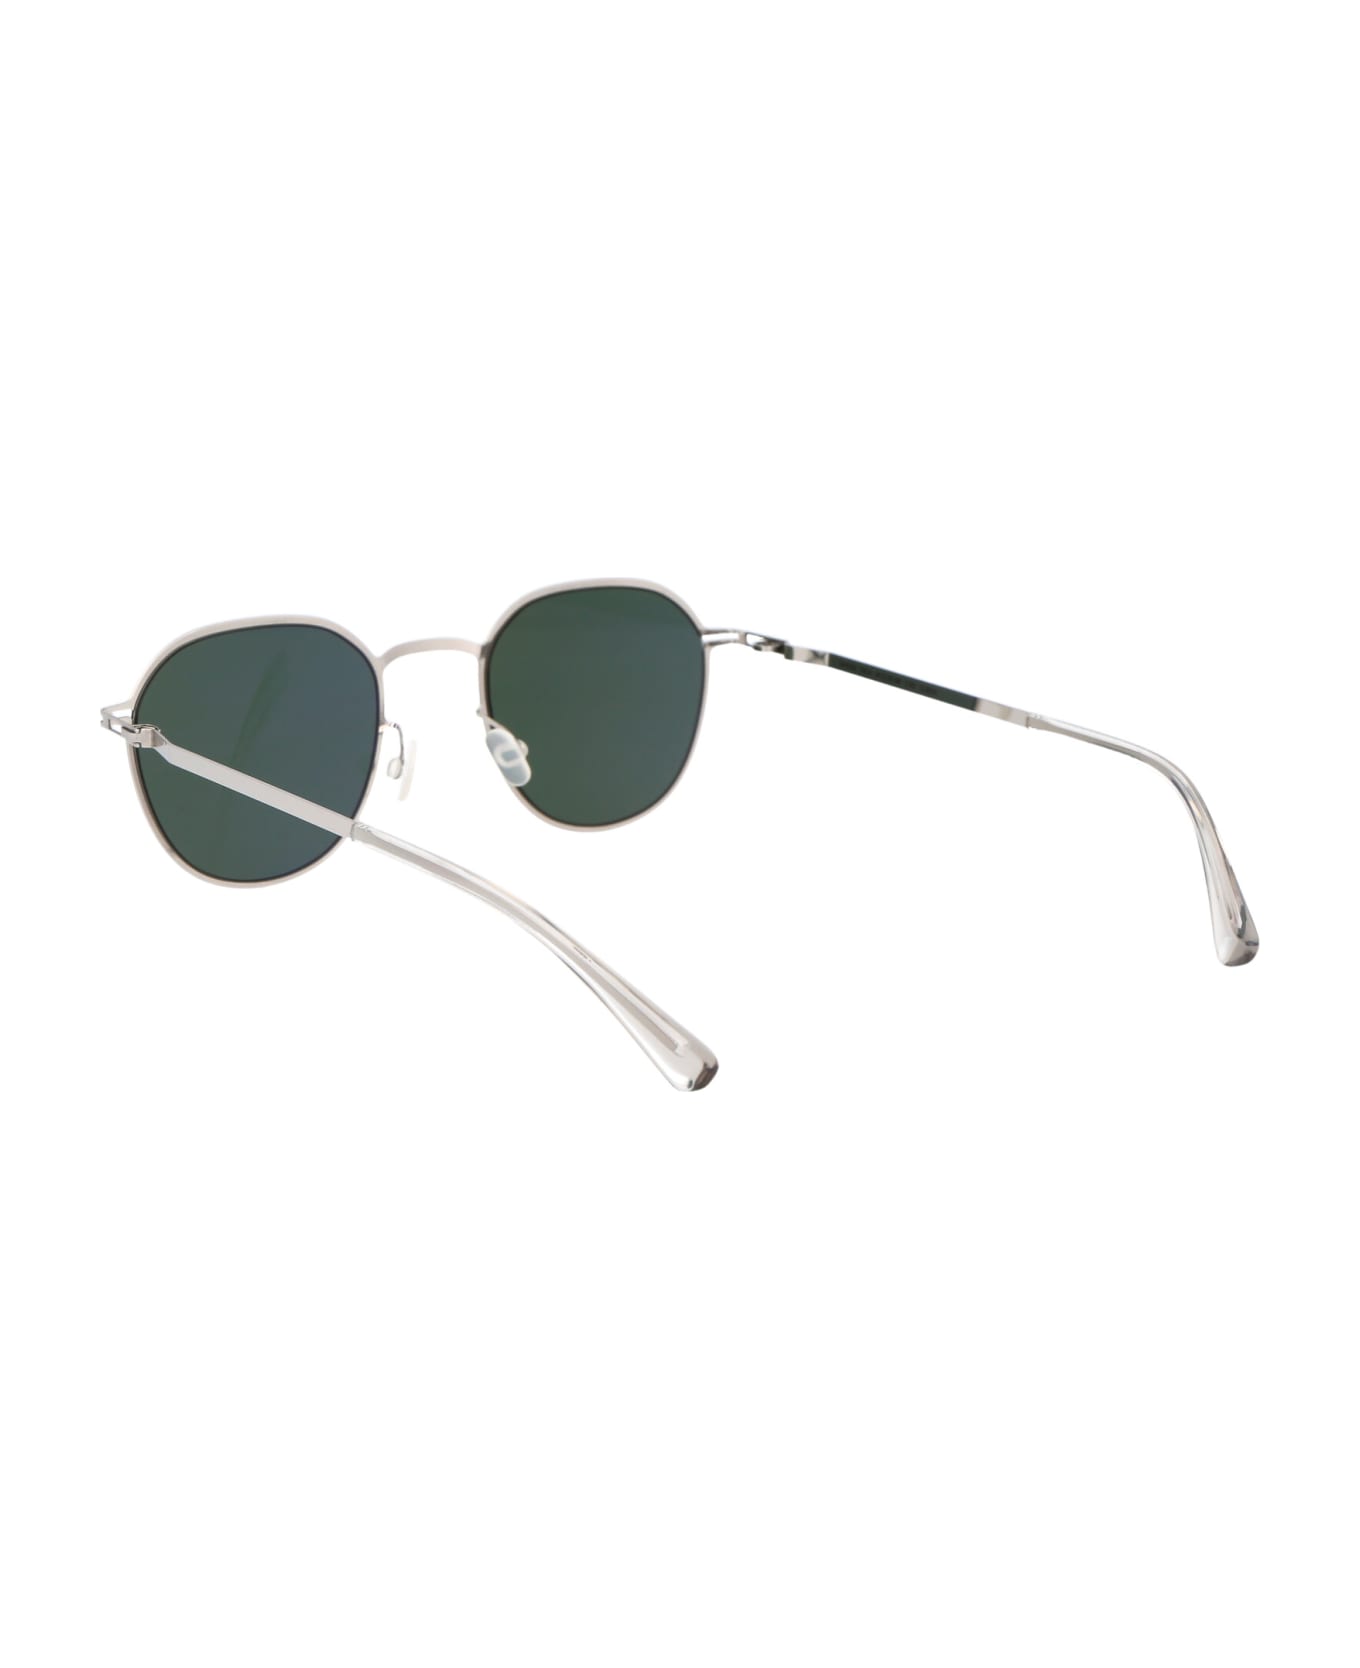 Mykita Talvi Sunglasses - 051 Shiny Silver Darkgreen Solid